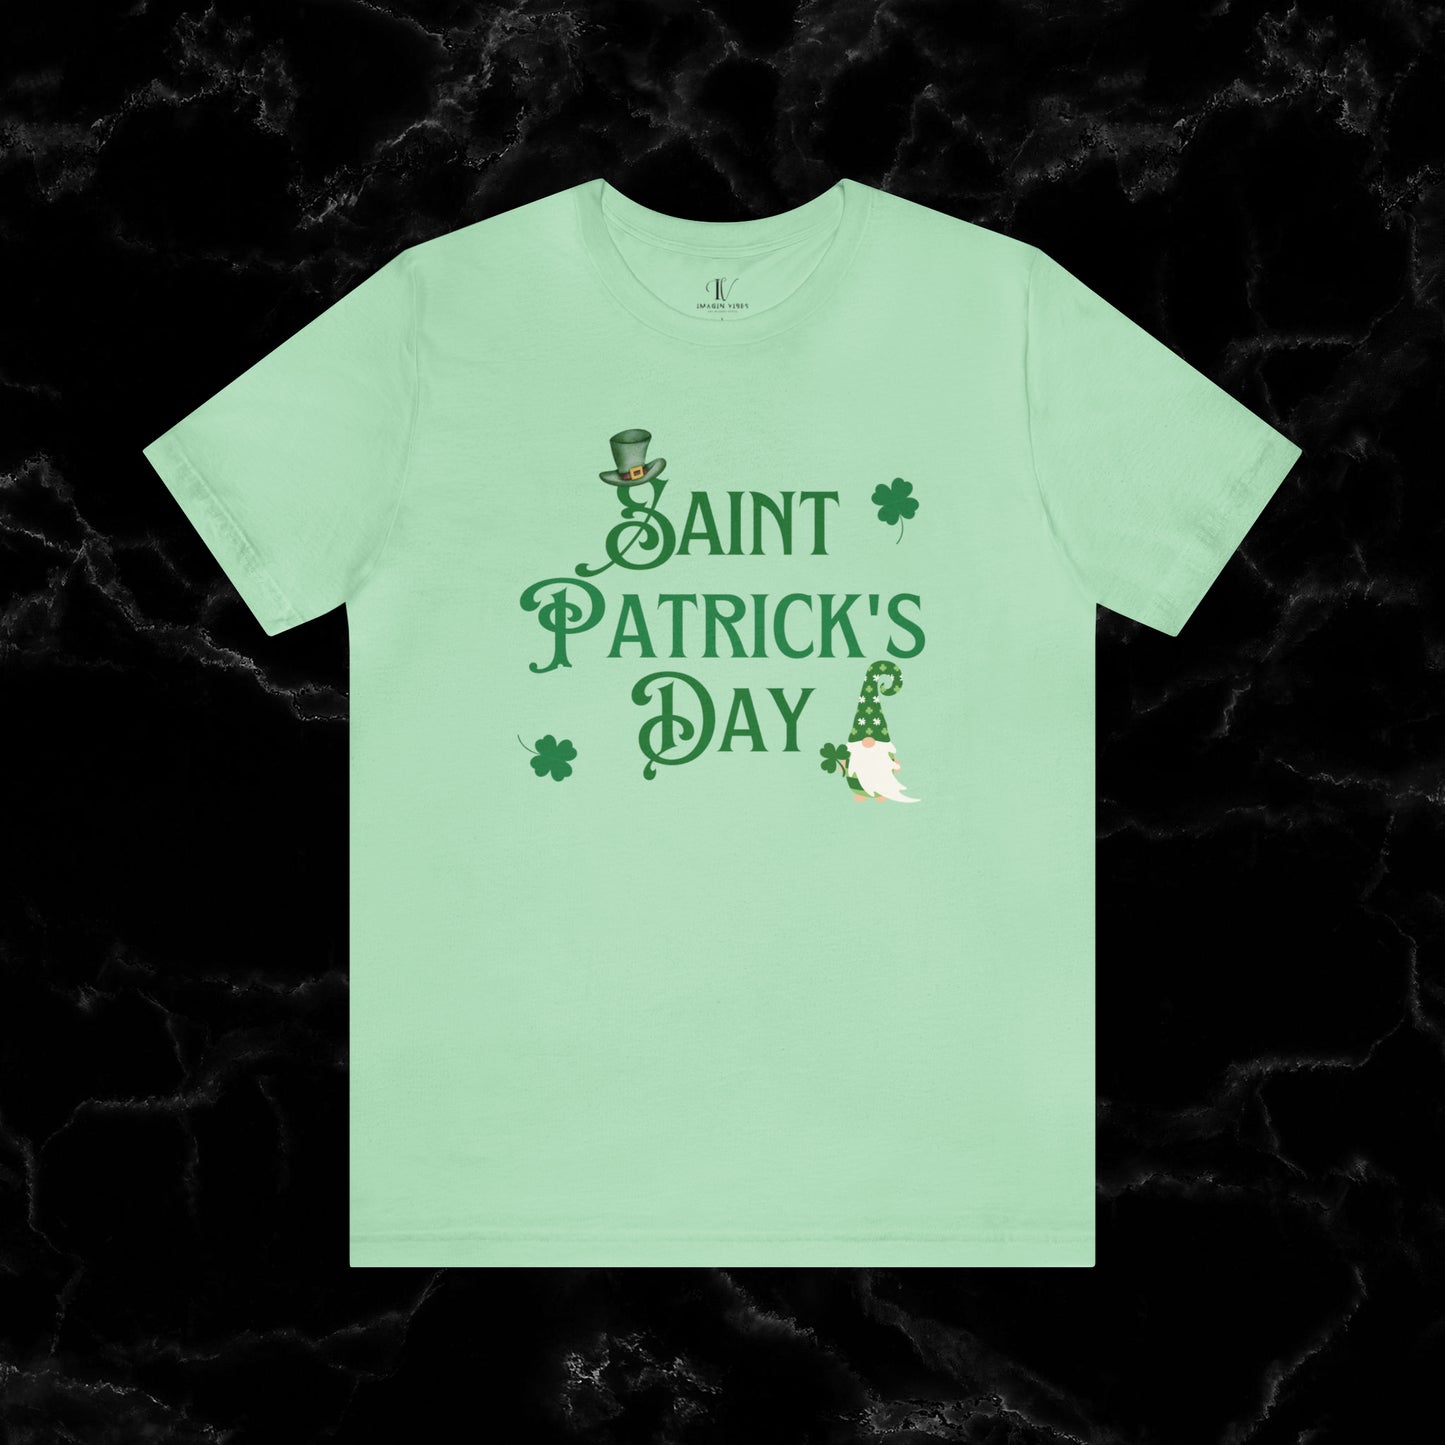 Saint Patrick's Day Shirt - St. Paddy's Day Lucky Irish Shamrock Leaf Clover Flag Beer T-Shirt T-Shirt Mint XS 